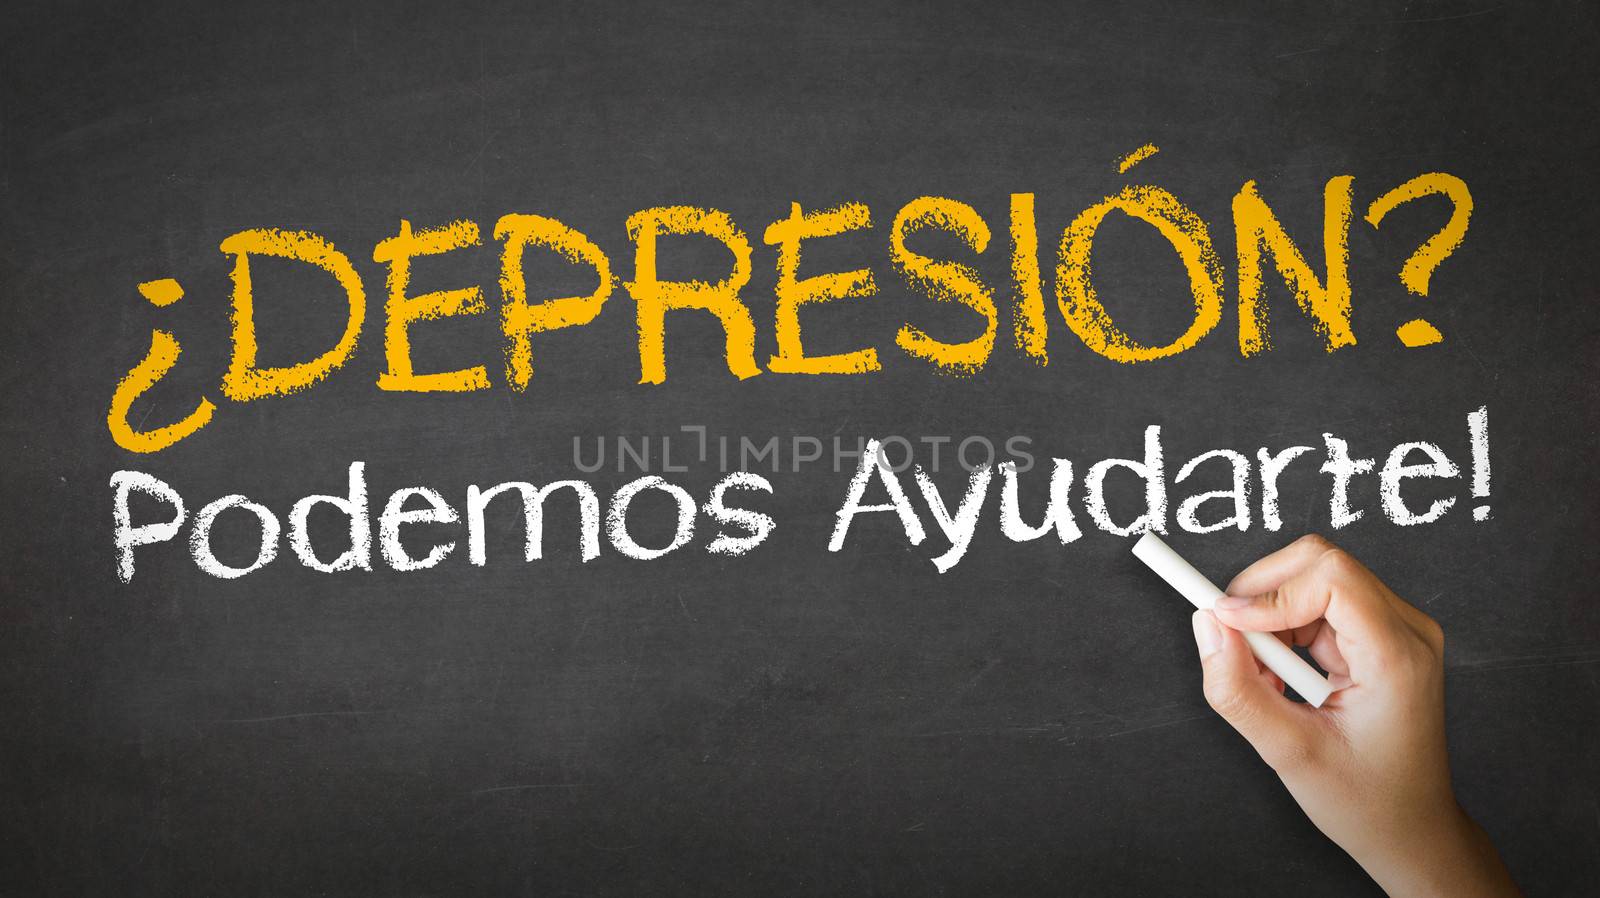 Depression we can help (In Spanish) by kbuntu